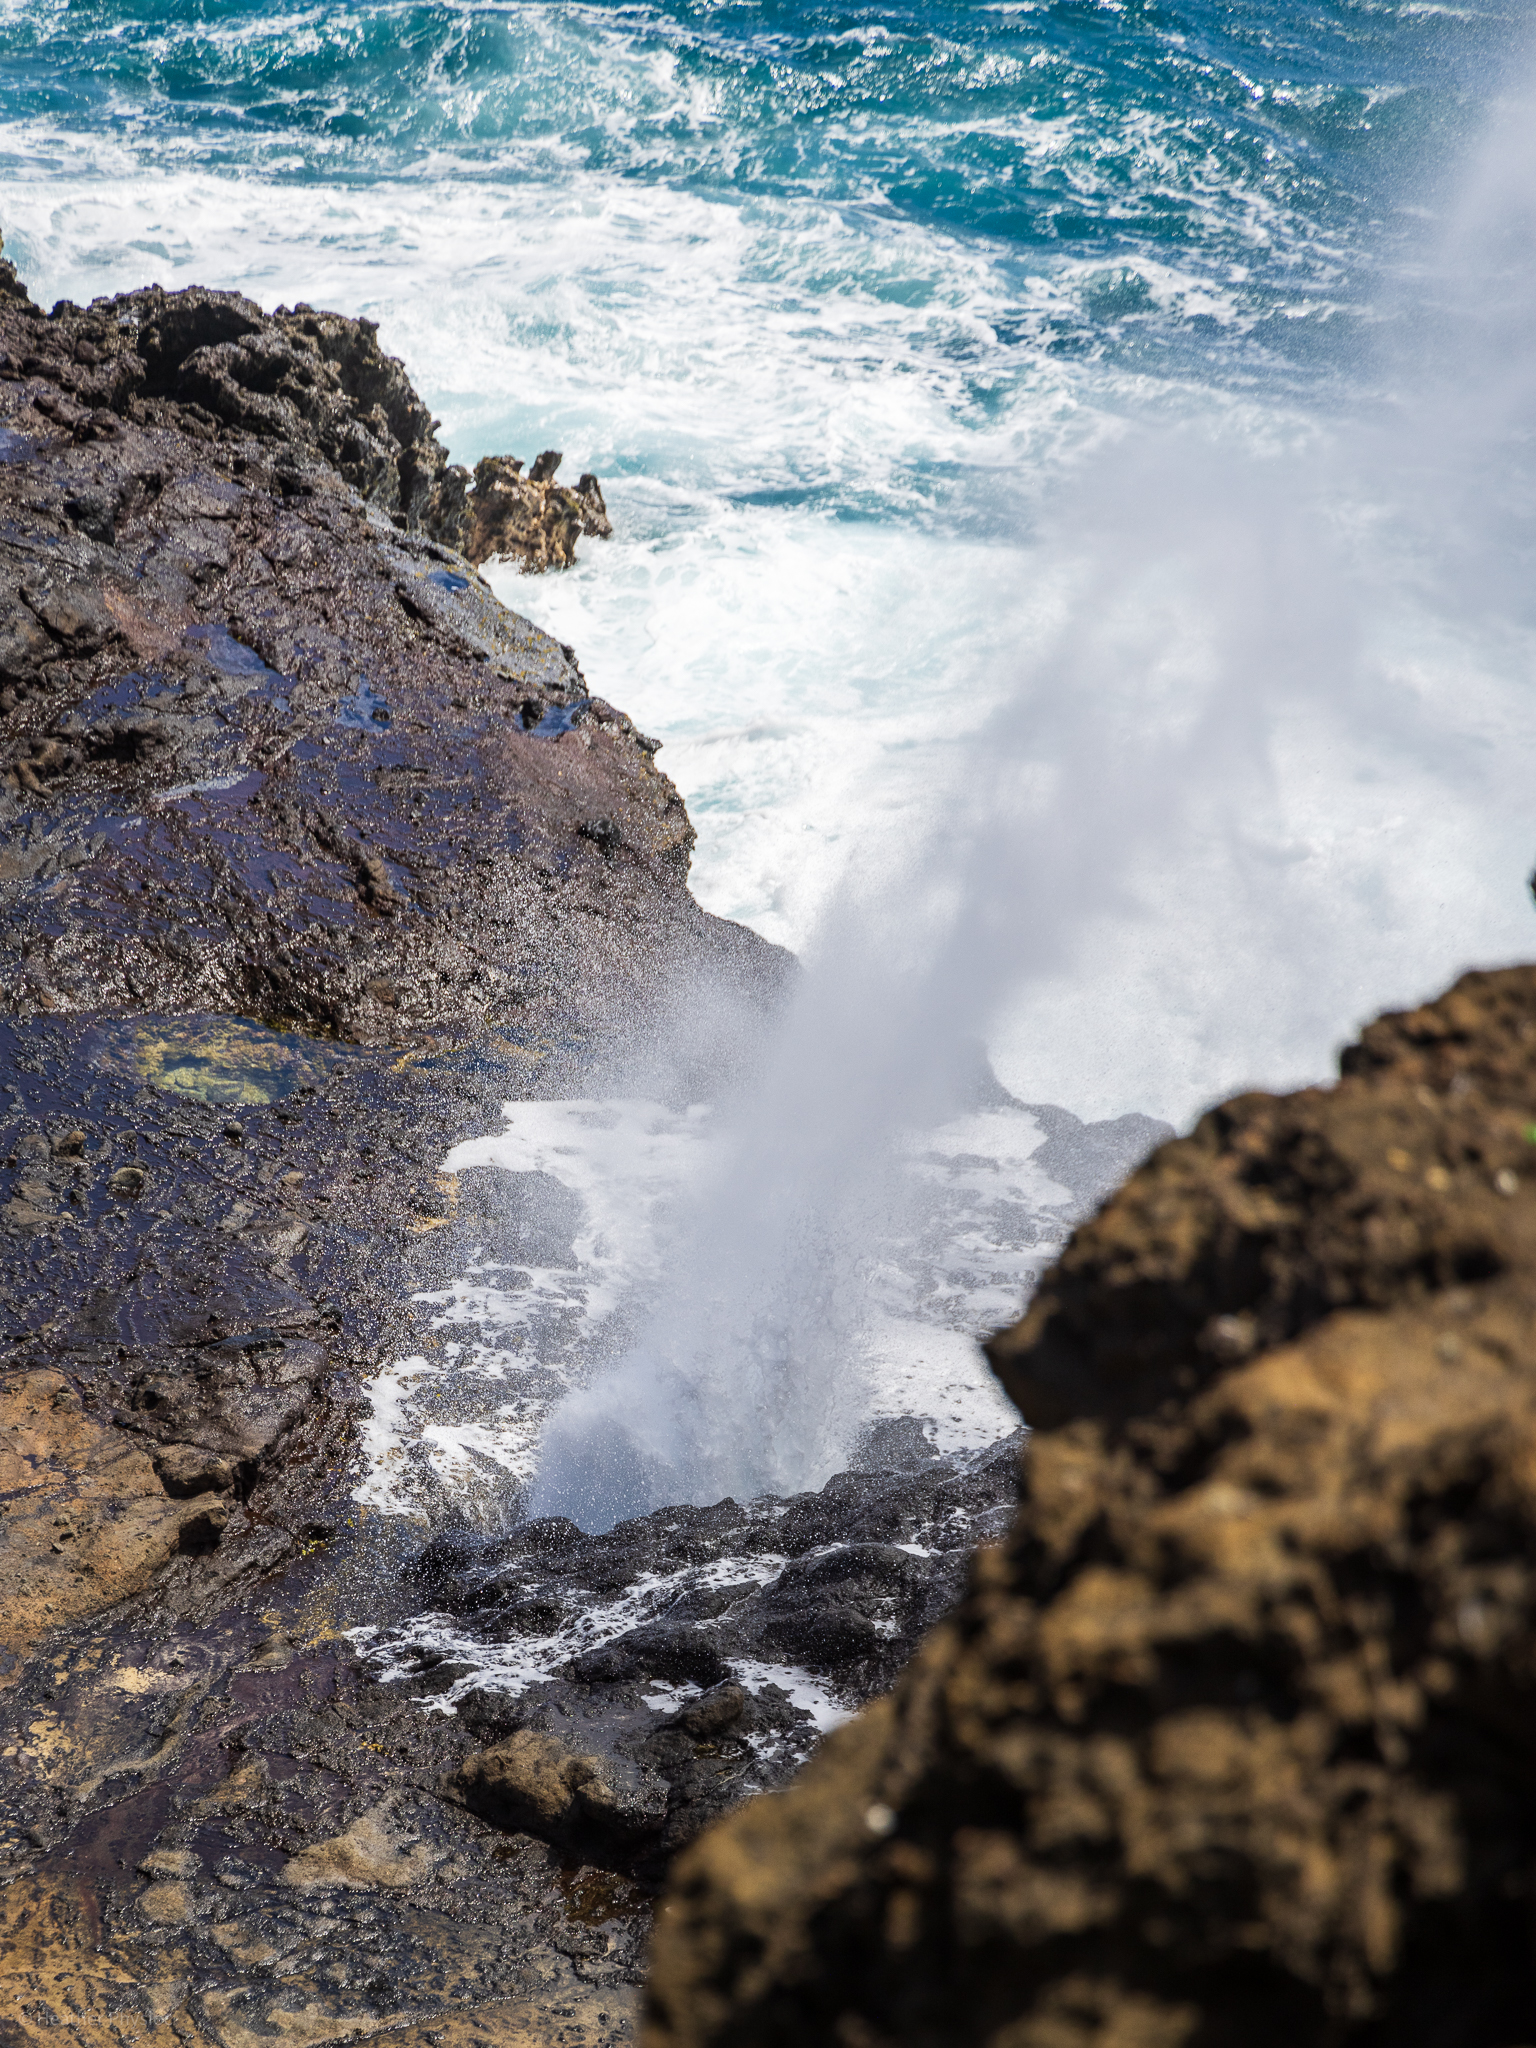 The Halona Blow Hole lava tube briefly spews ocean spray